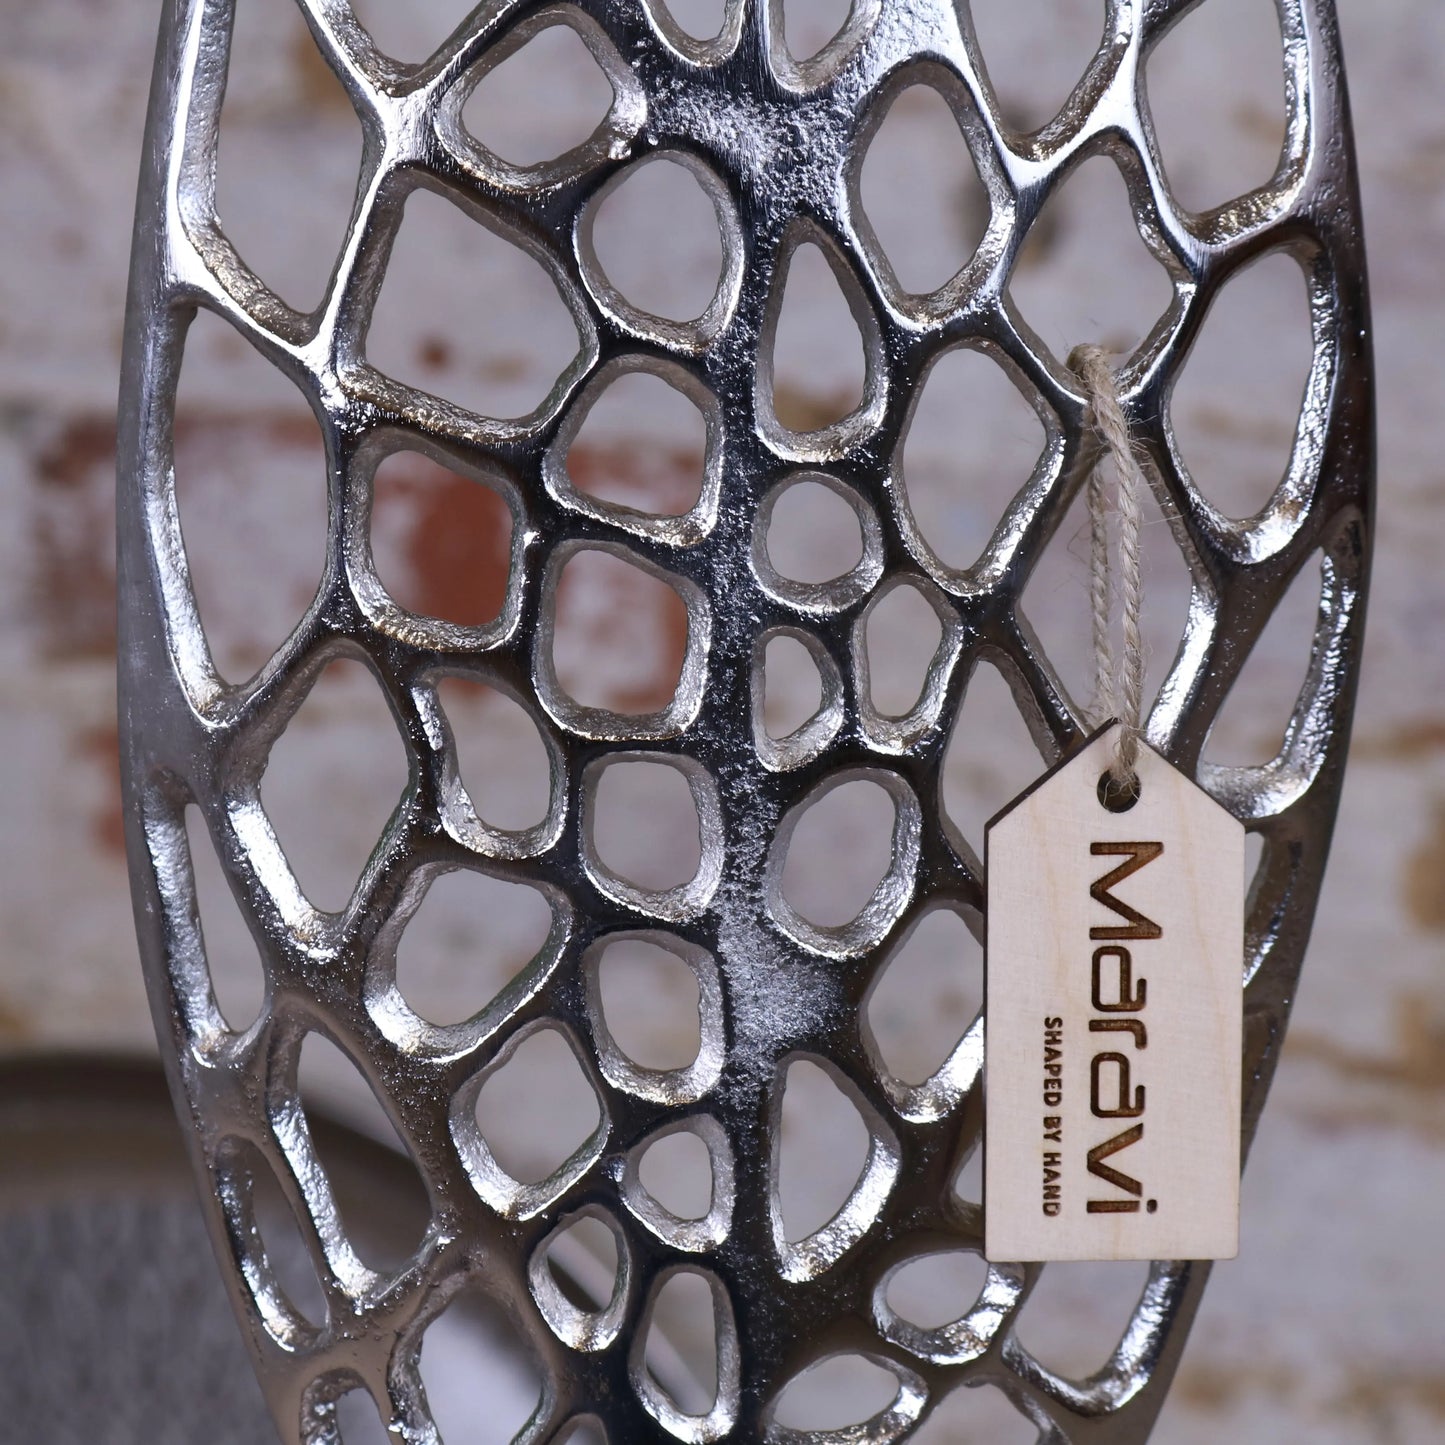 Hasgul Silver Leaf Ornament Closeup of Distressed Design